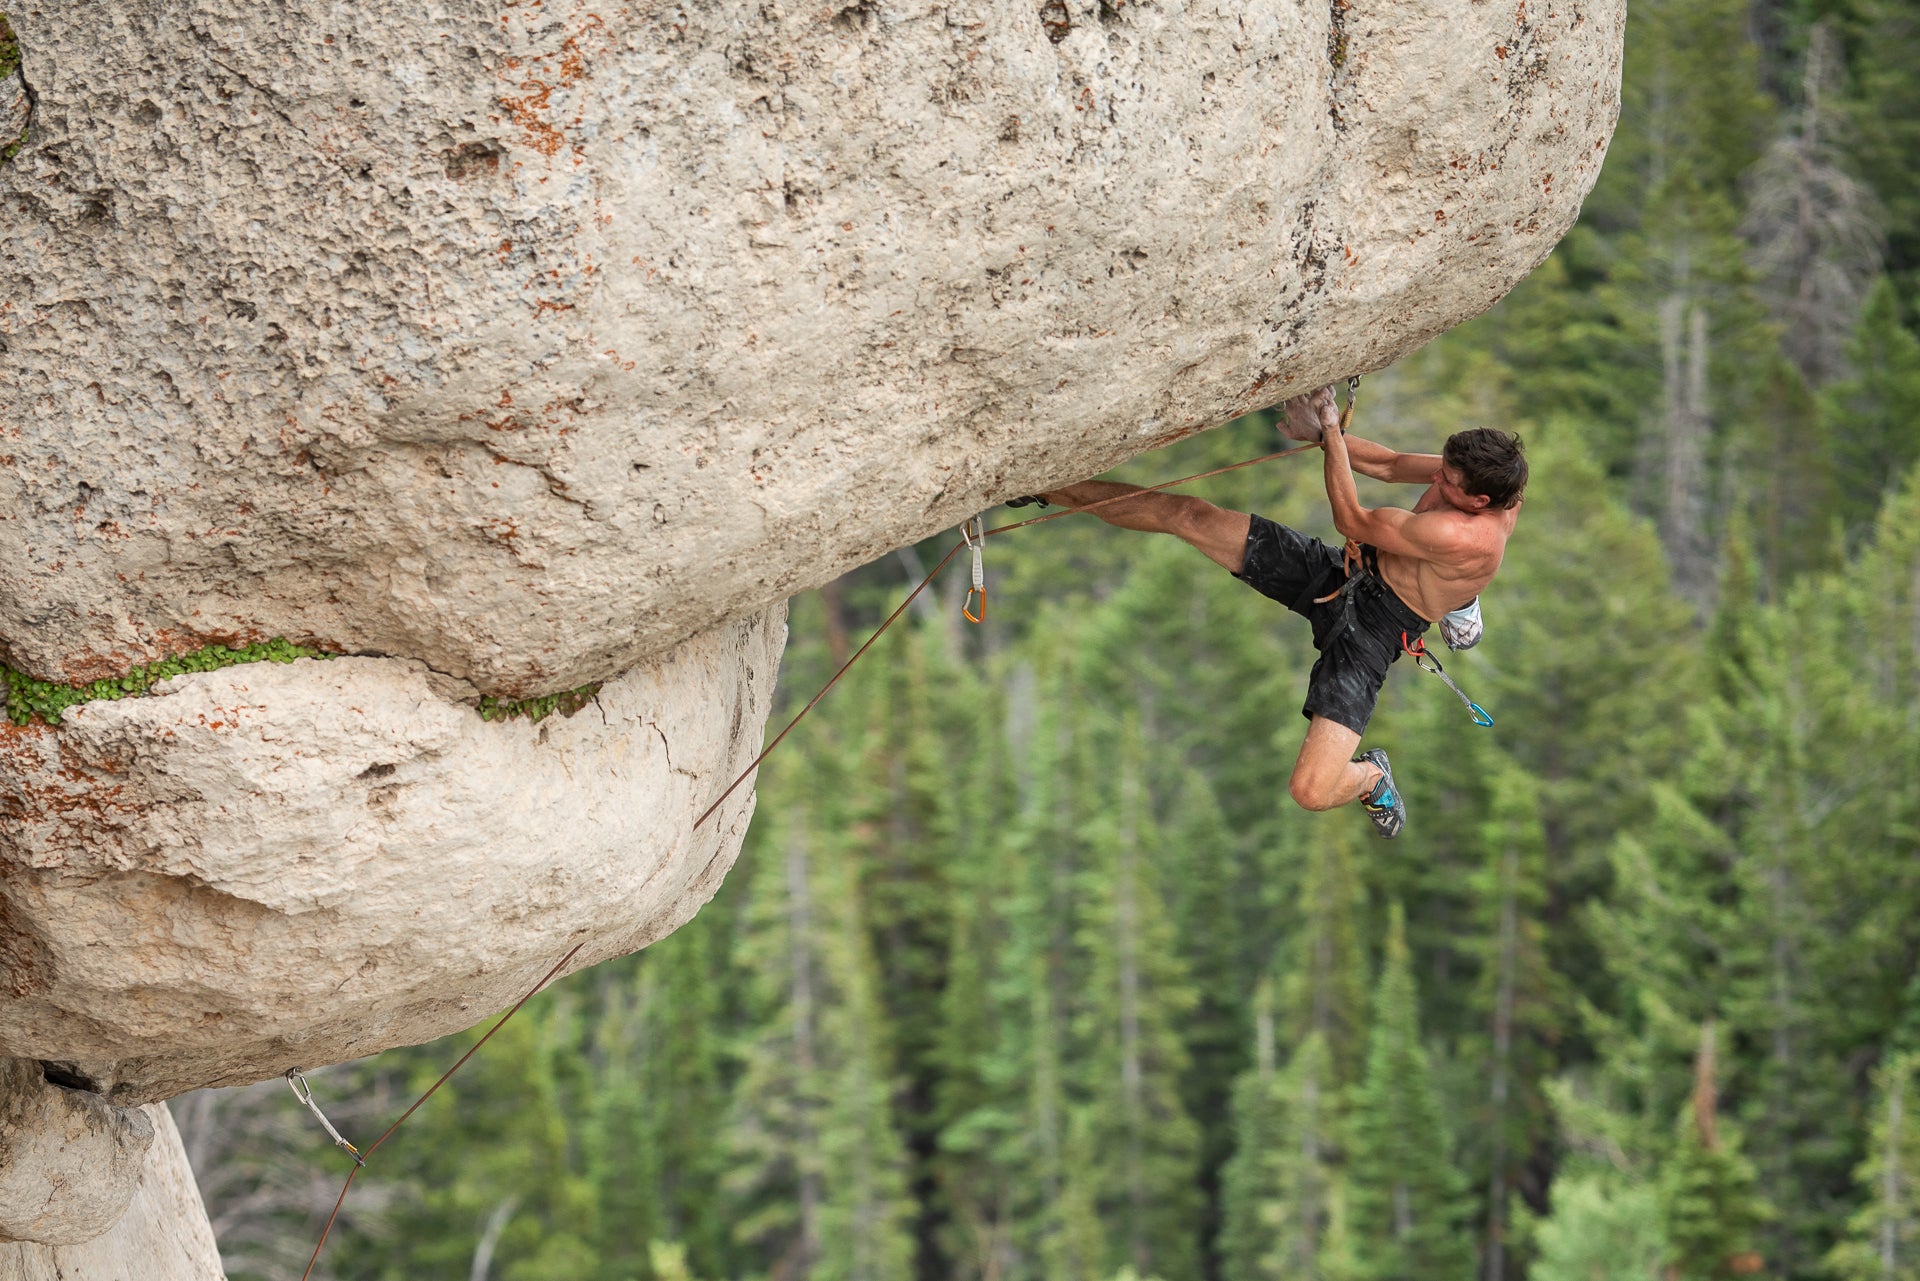 Can Rock Climbing Build Muscle?